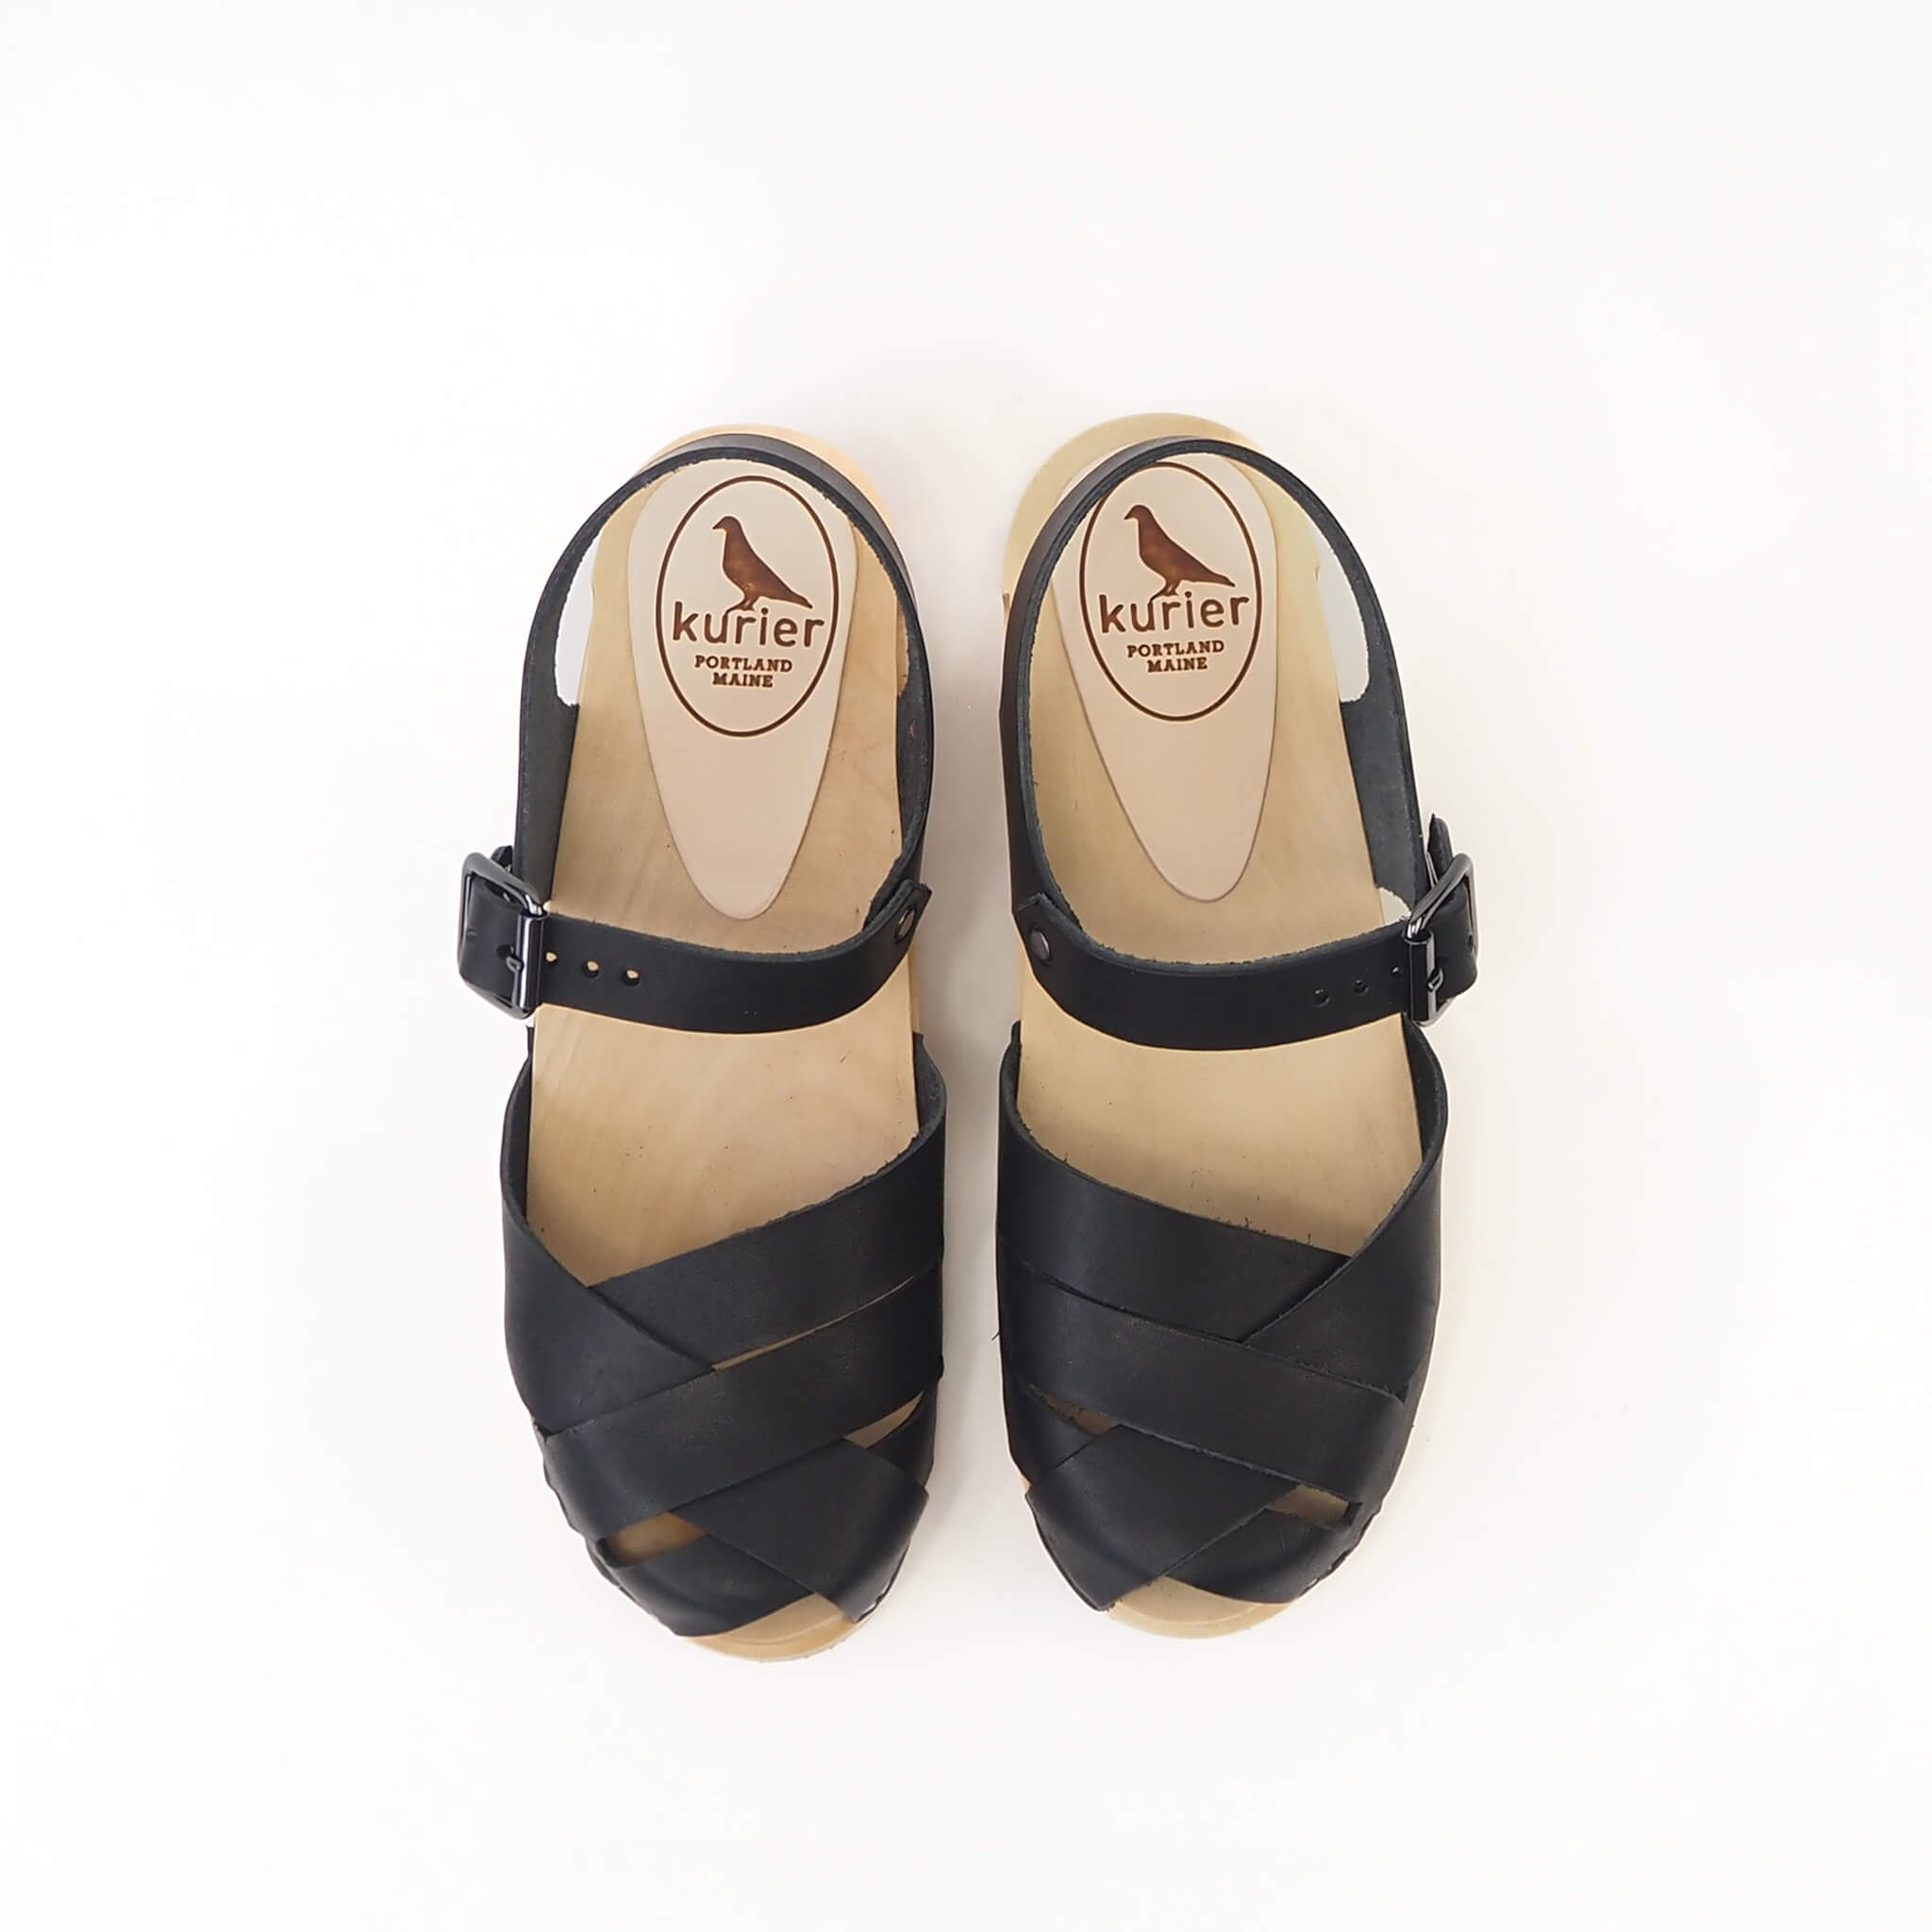 emelia clog low heel peep toe mary janesandal handmade american leather wood - coal top view